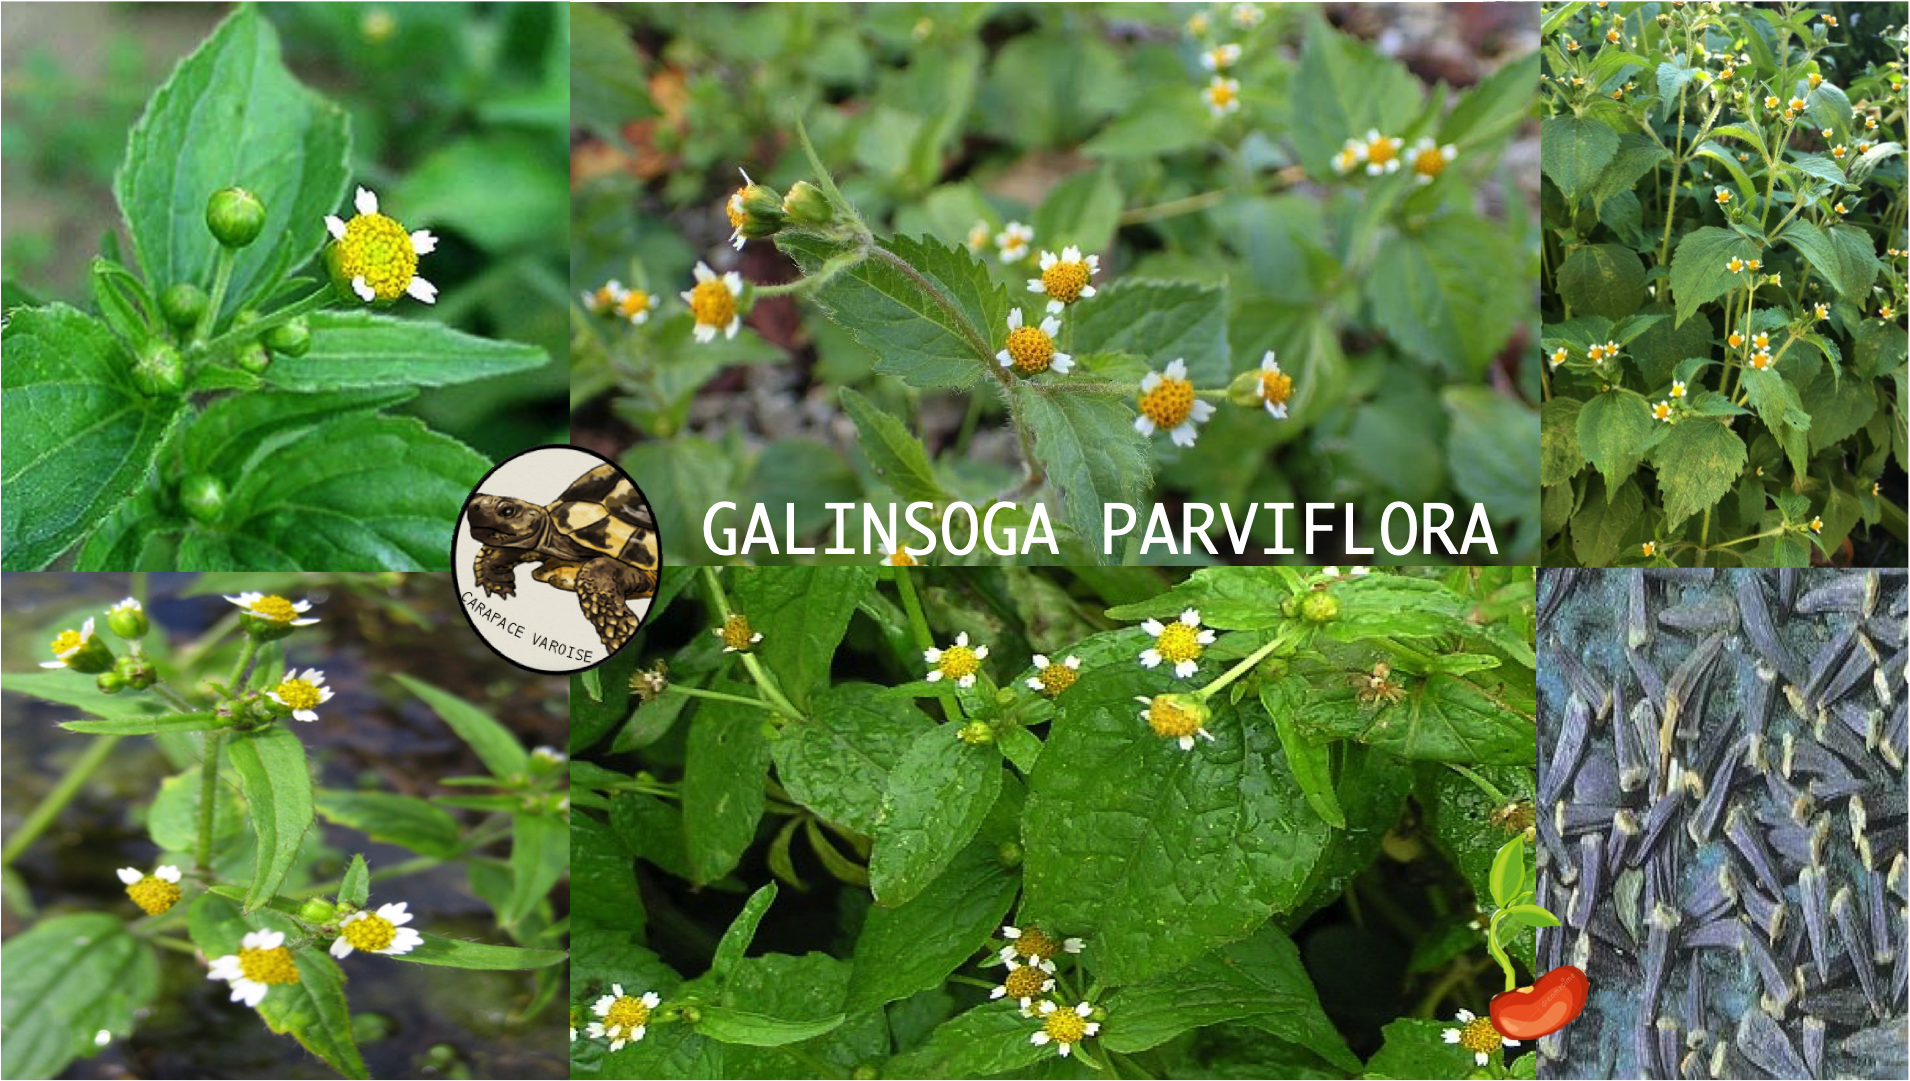 Galinsoga parviflora